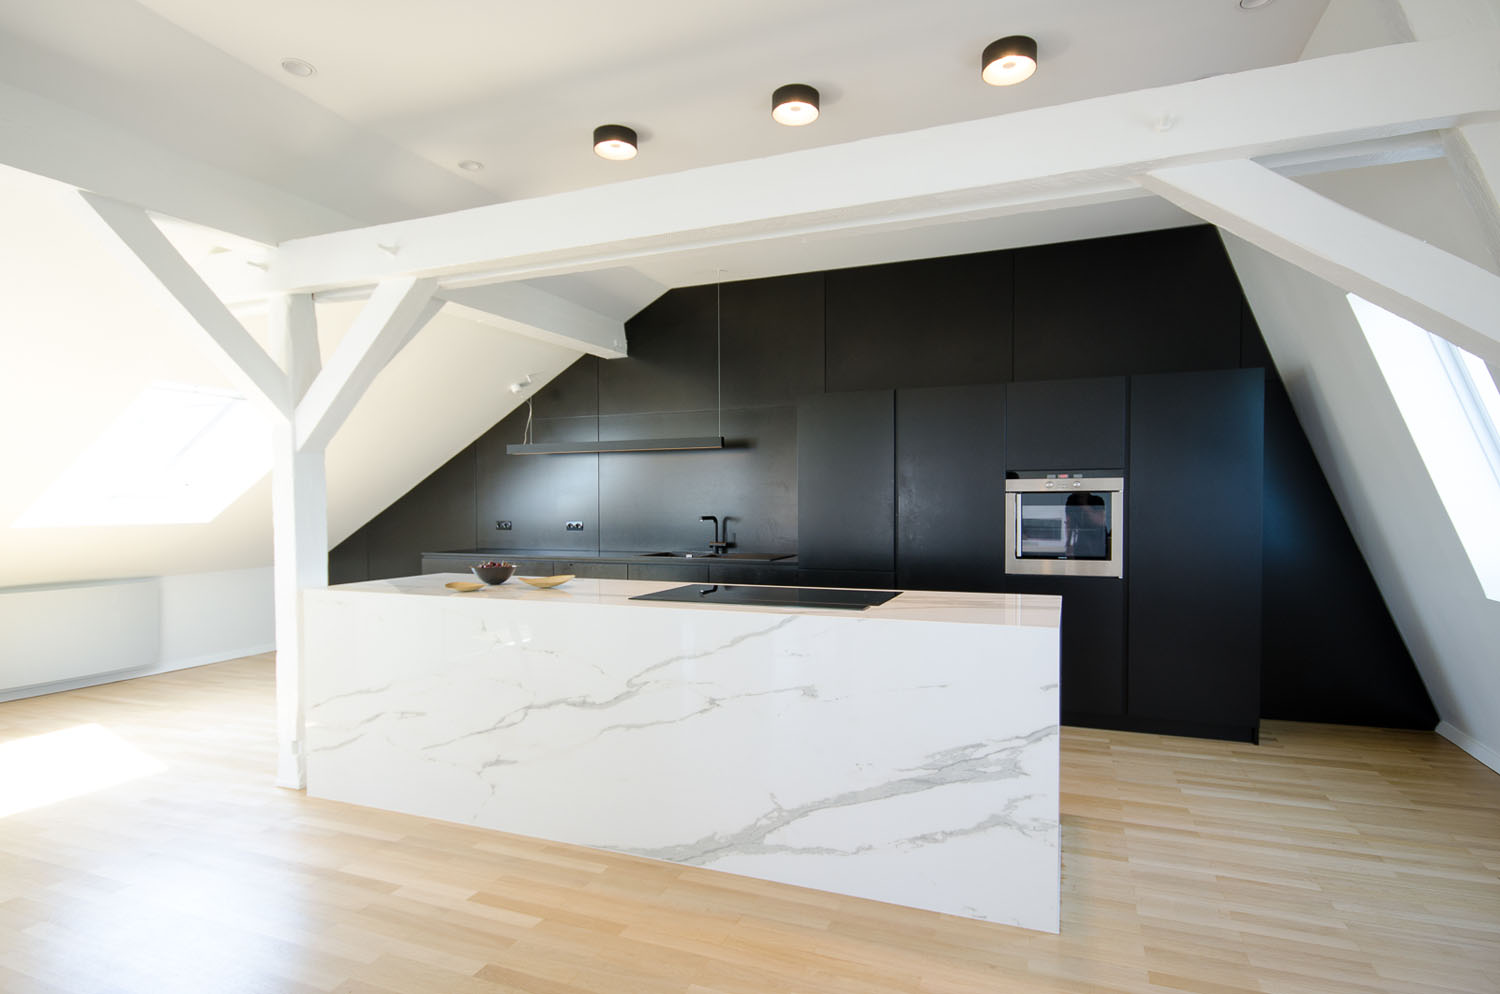 Modern Black and White Kitchen Design